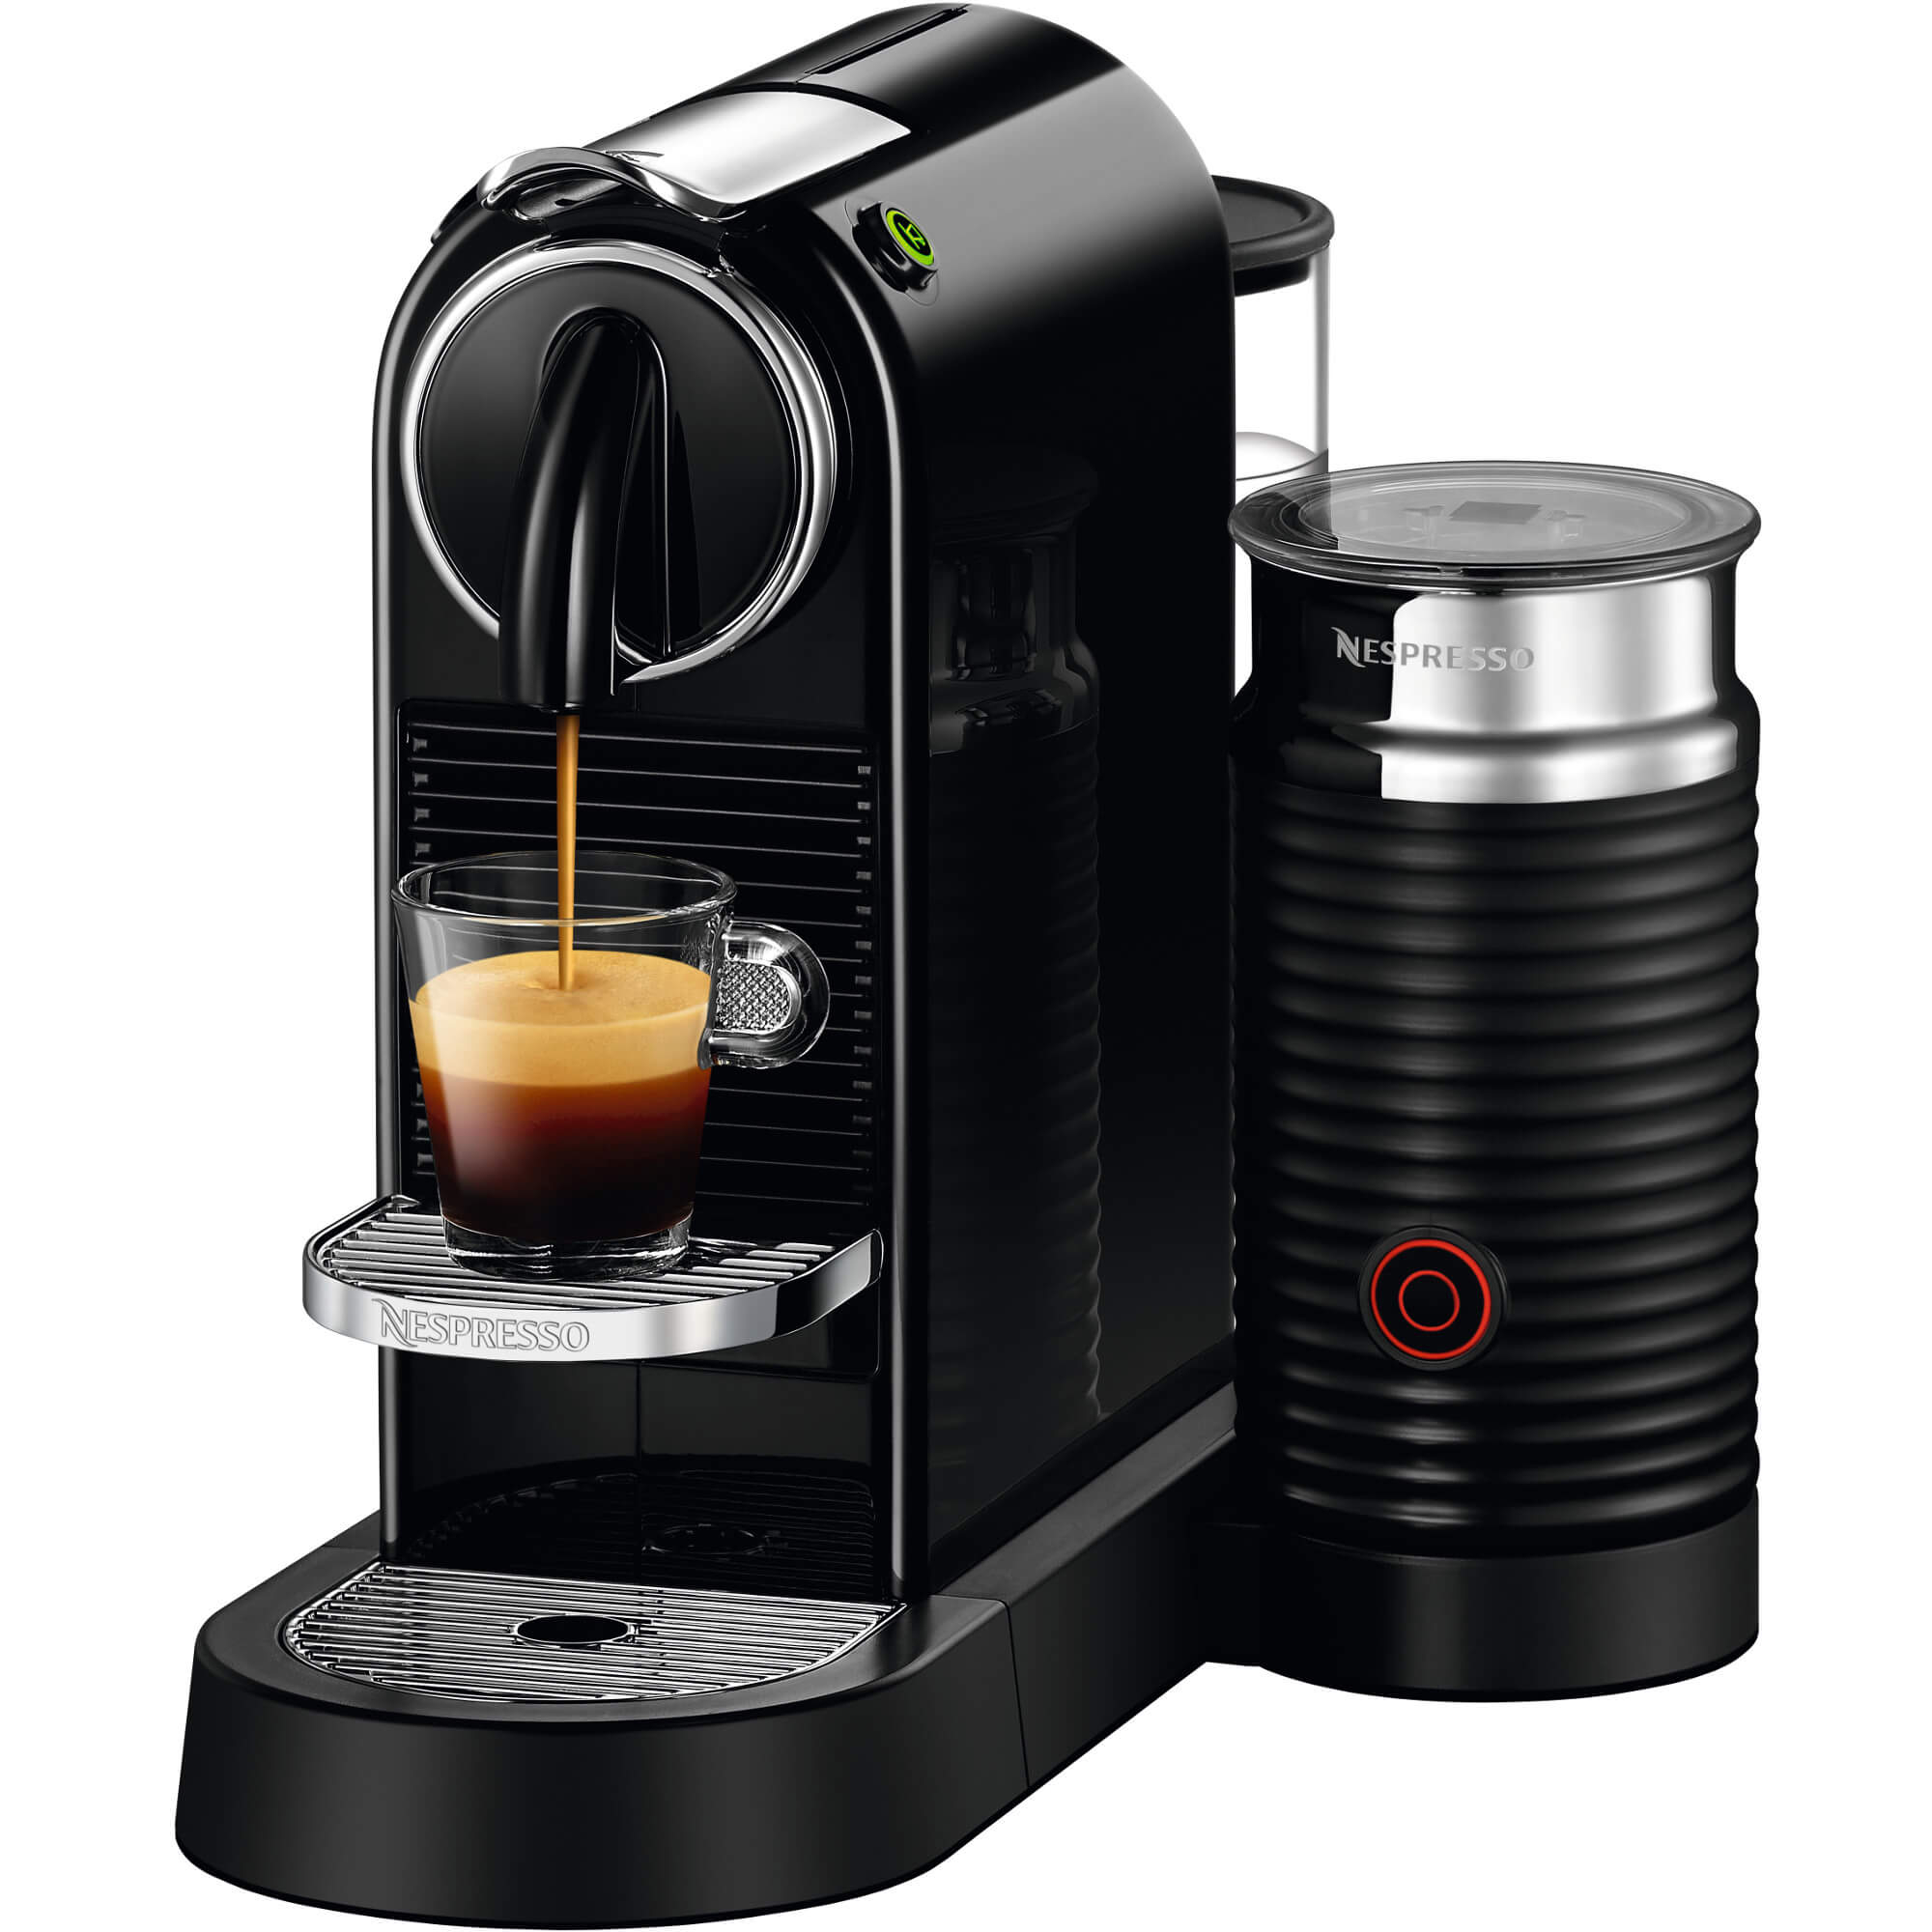  Espressor Nespresso Citiz&Milk D123, 1710 W, 1 L, 19 bar, Negru 